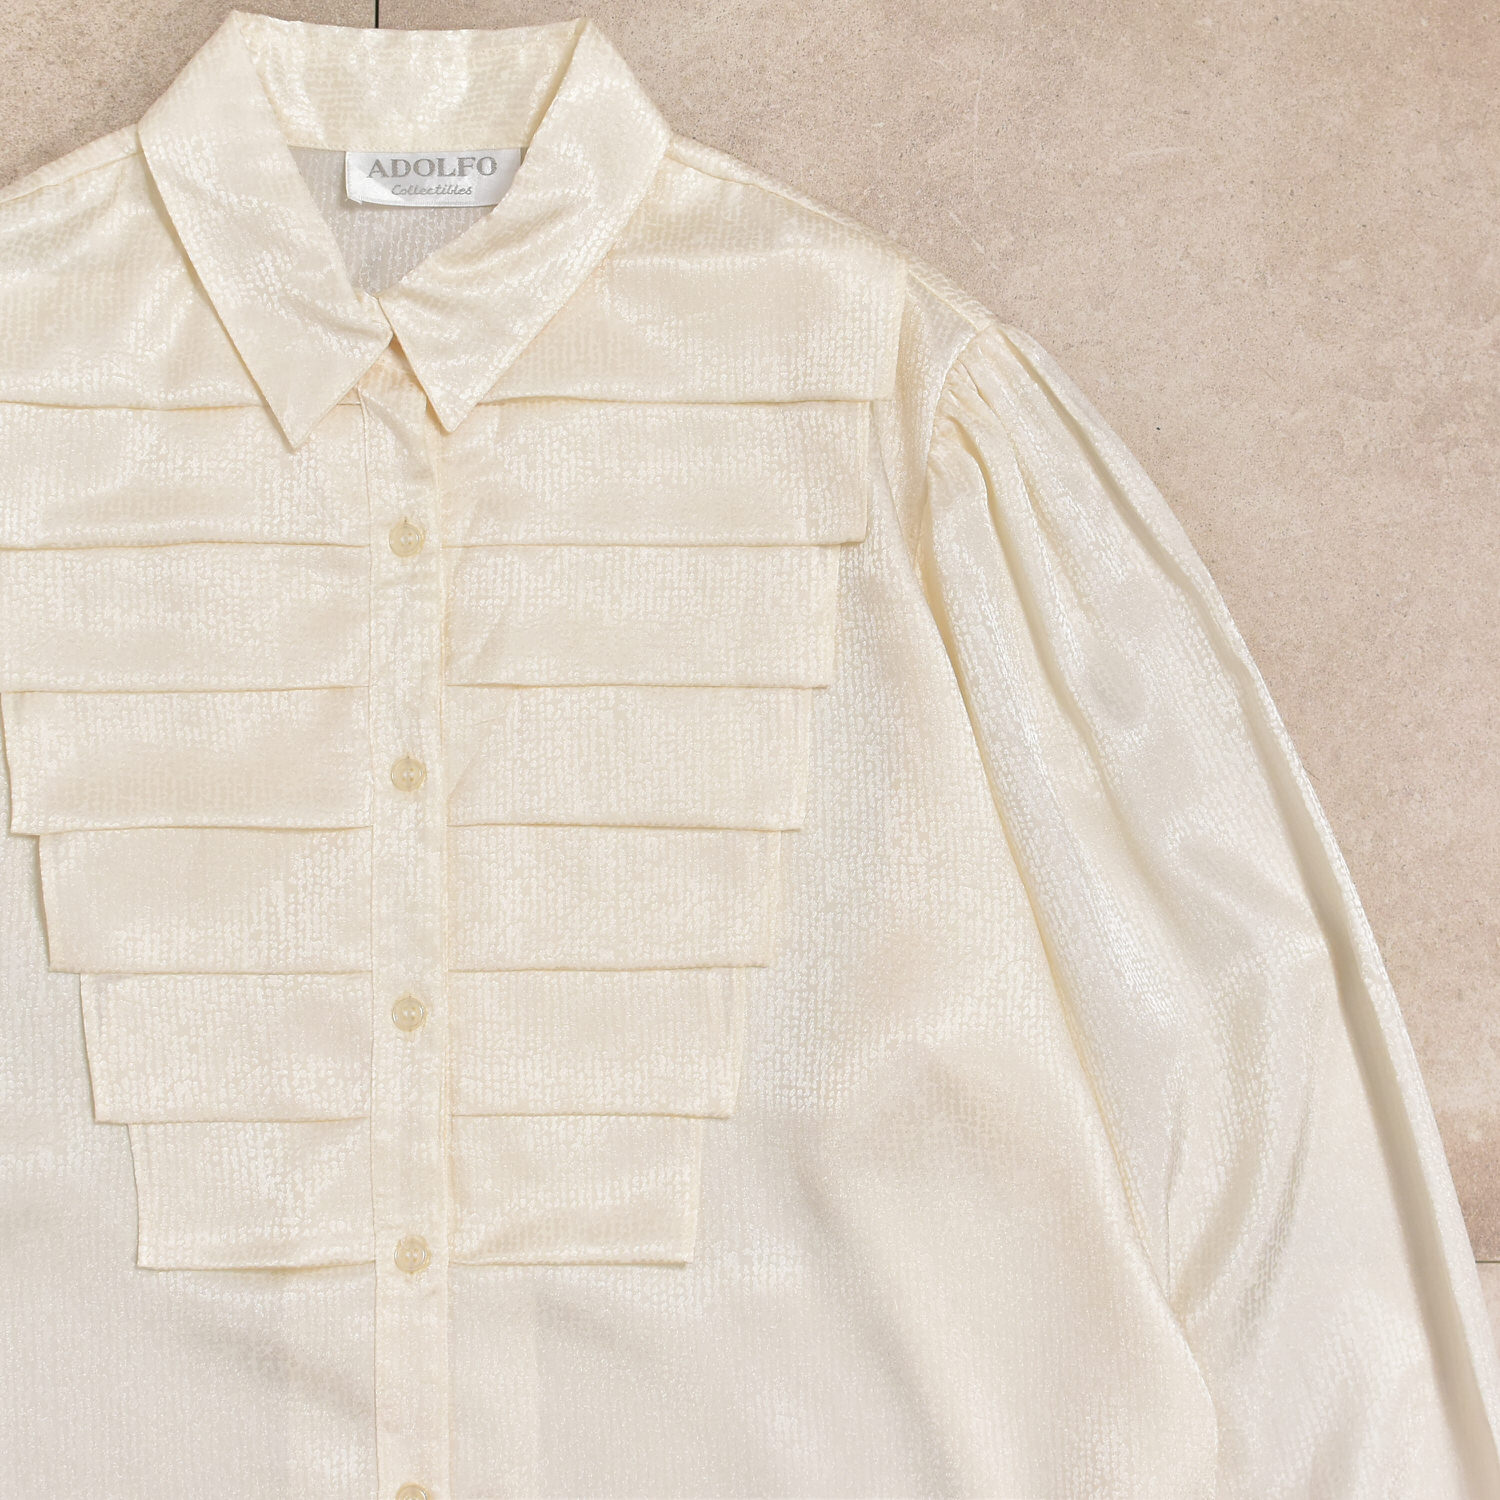 90s vintage  frill dress shirts white